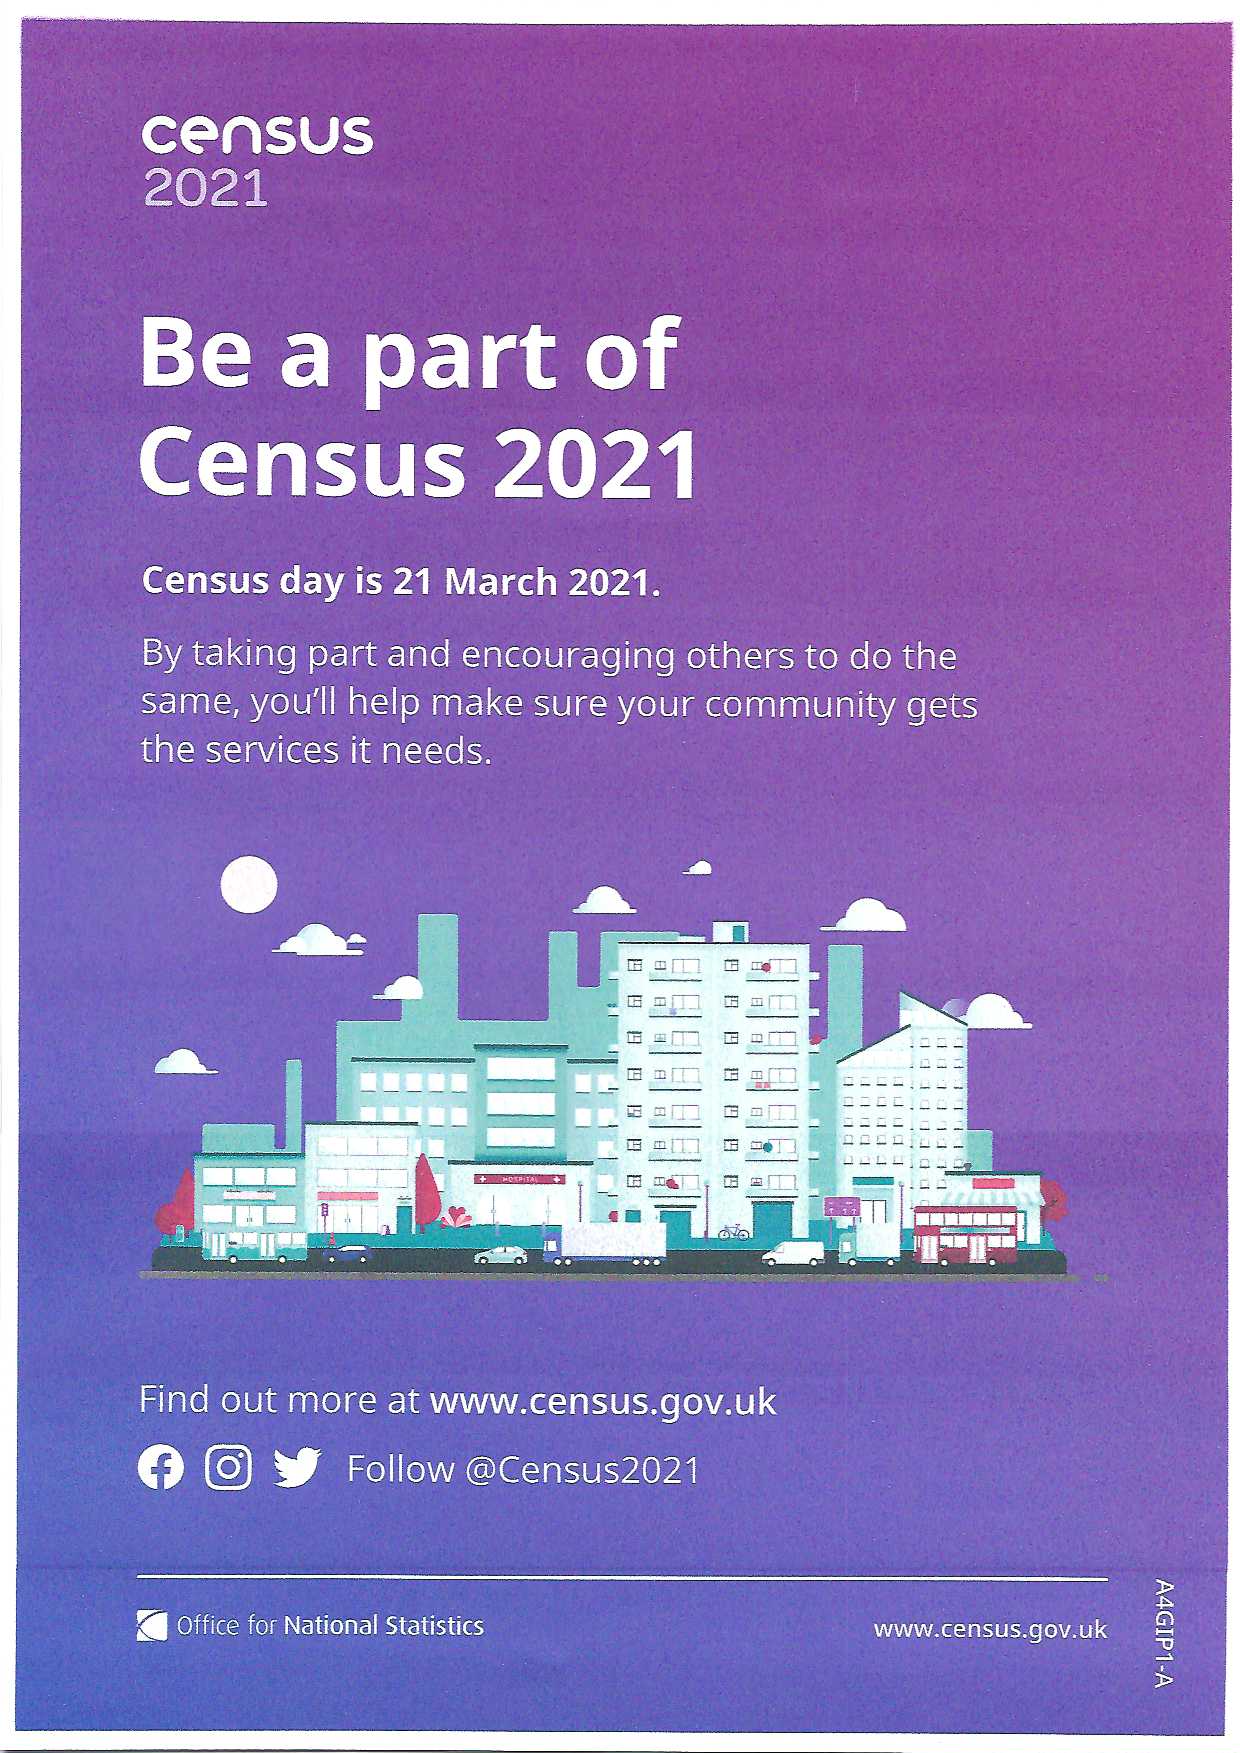 images/news/Census 2021 .jpg